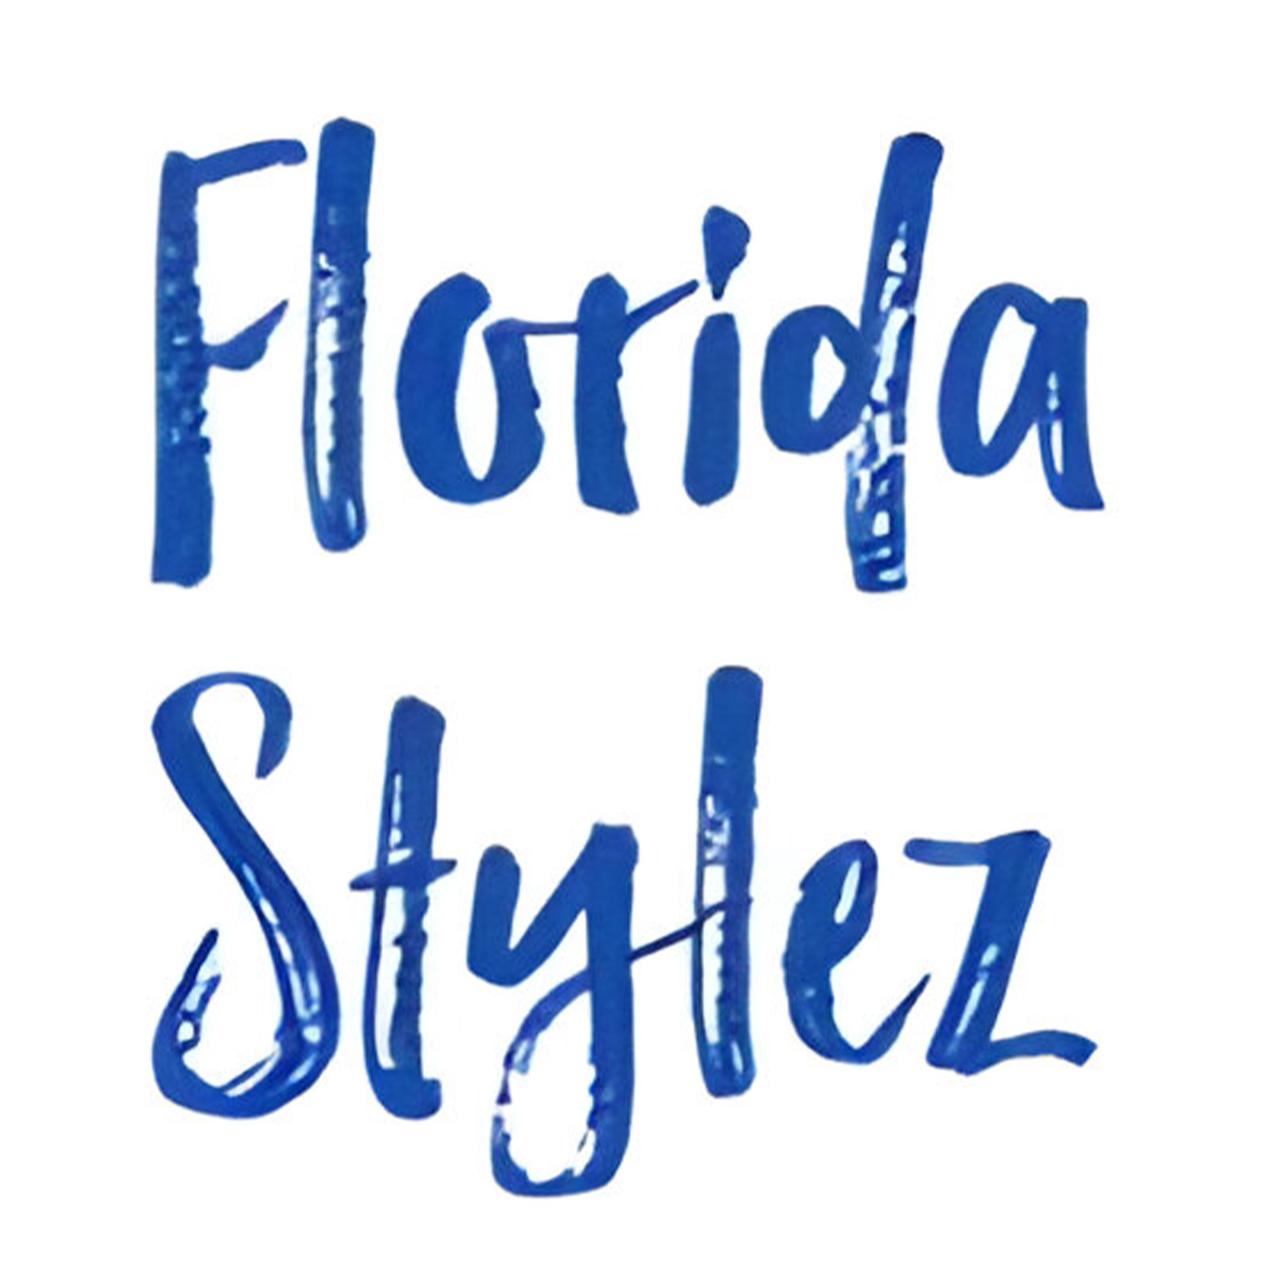 FloridaStylez's images